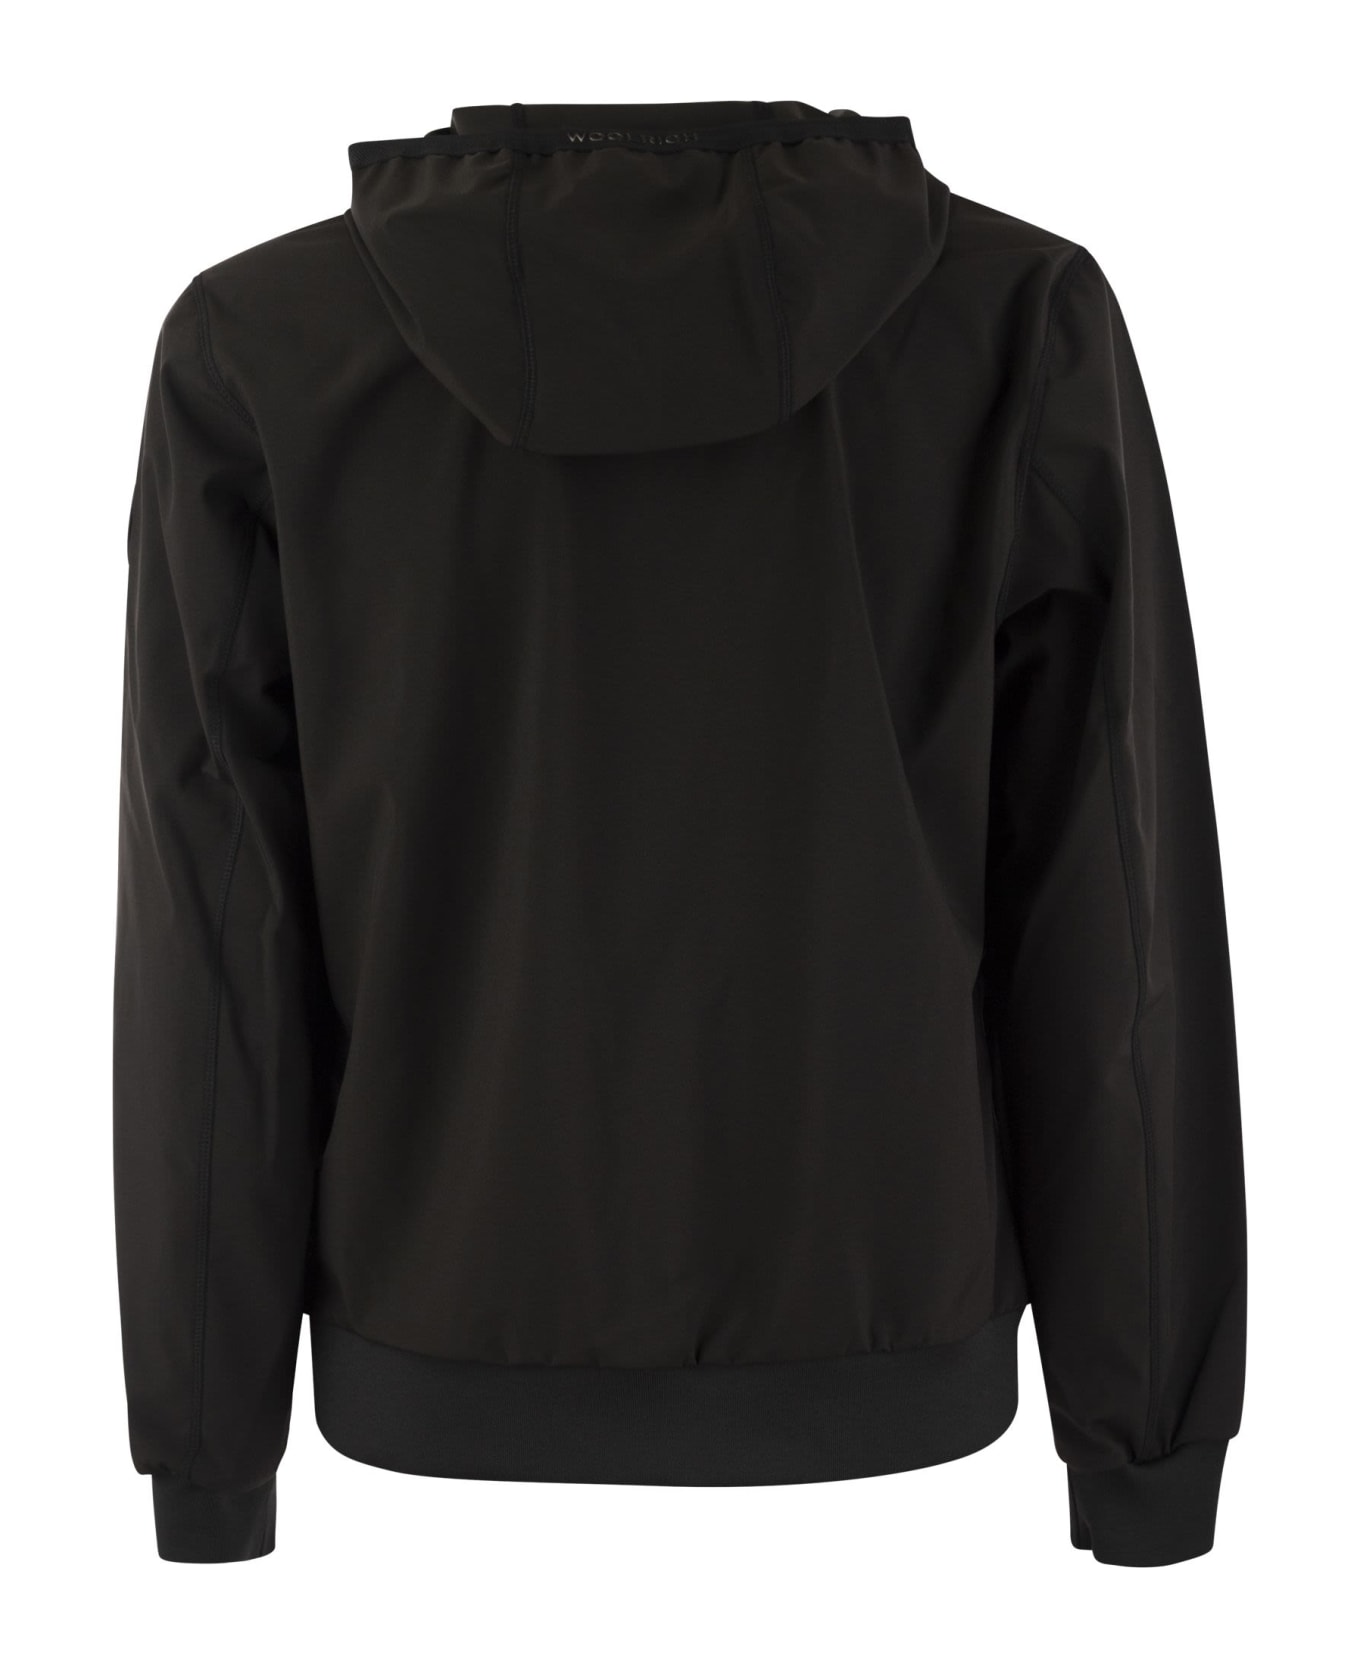 Woolrich Jacket With Zip - Black